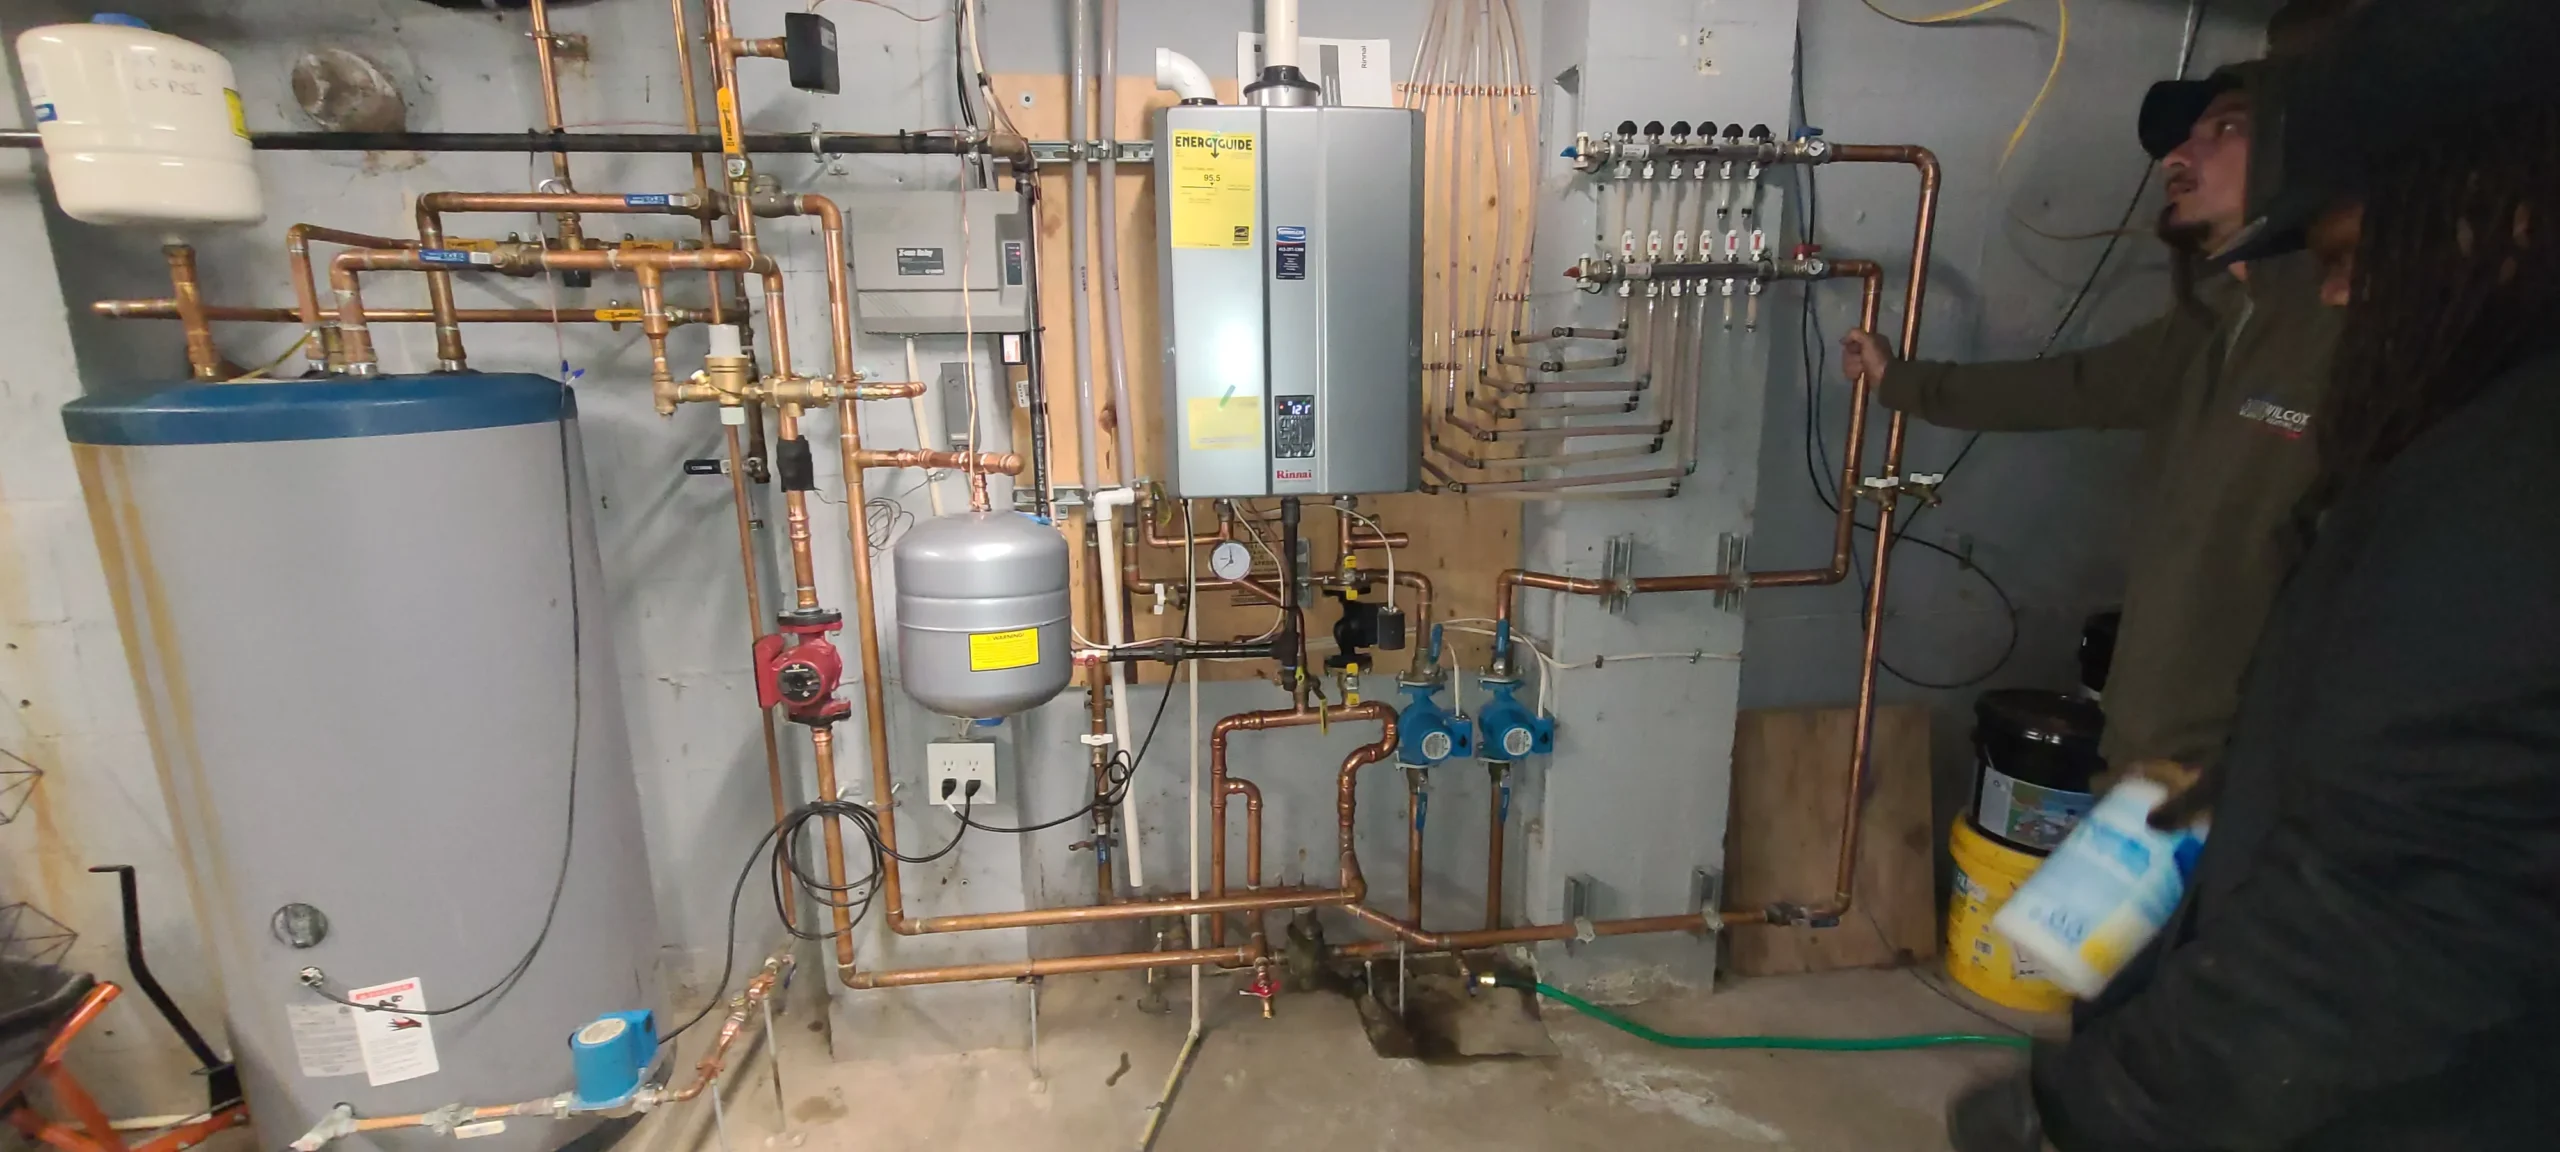 Boiler Services In Bridgeville, McDonald, Mt. Lebanon, PA, And Surrounding Areas | John Wilcox Plumbing Heating Cooling